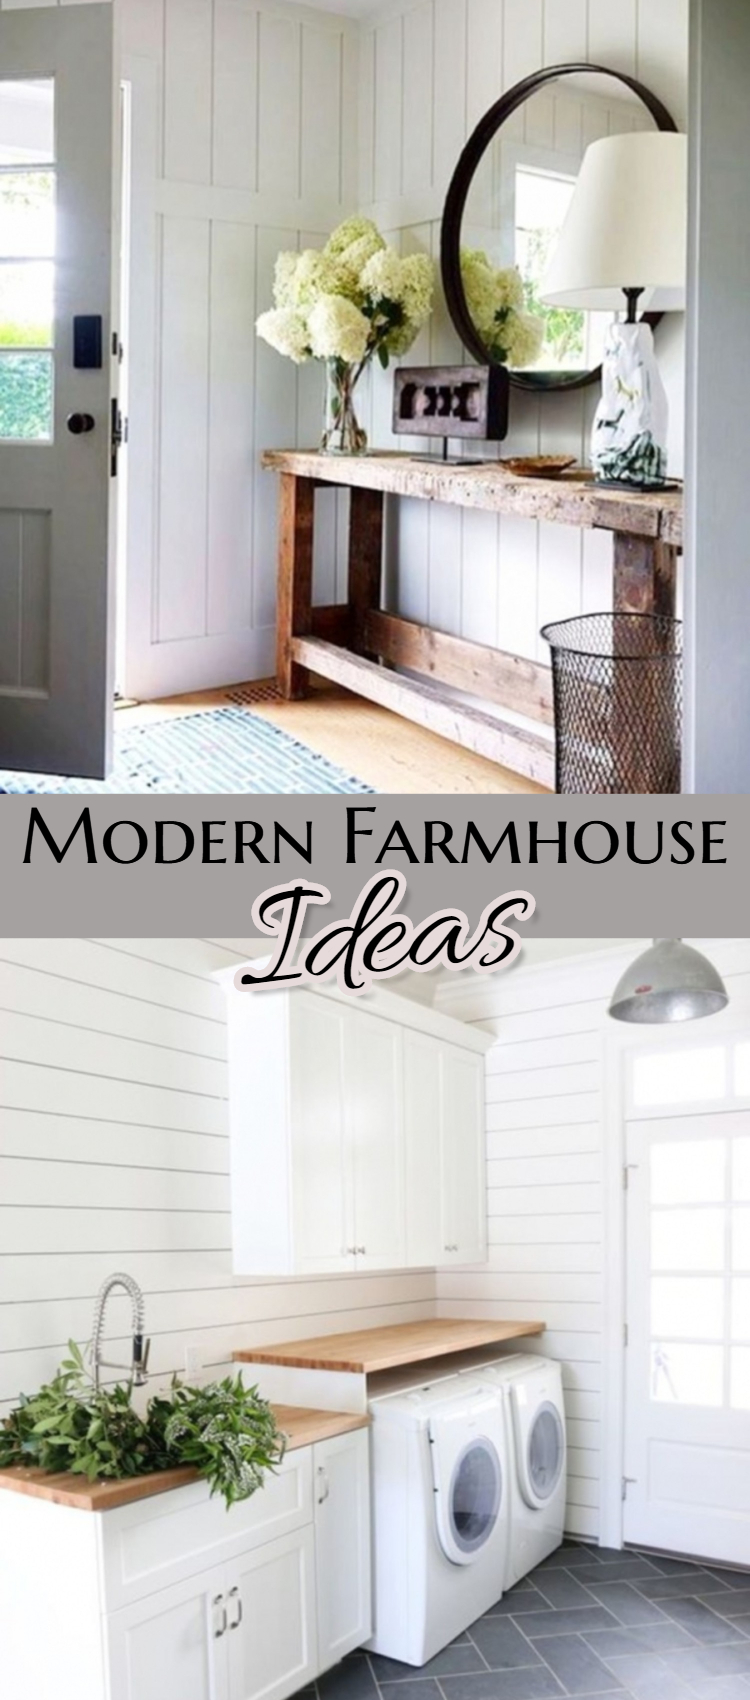 Modern Farmhouse Decorating Ideas for Every Room in Your Home - GORGEOUS farmhouse decor ideas! #homedecorideas #farmhousestyle #diyhomedecor #livingroomideas #kitchenideas #bedroomideas #farmhousedecor